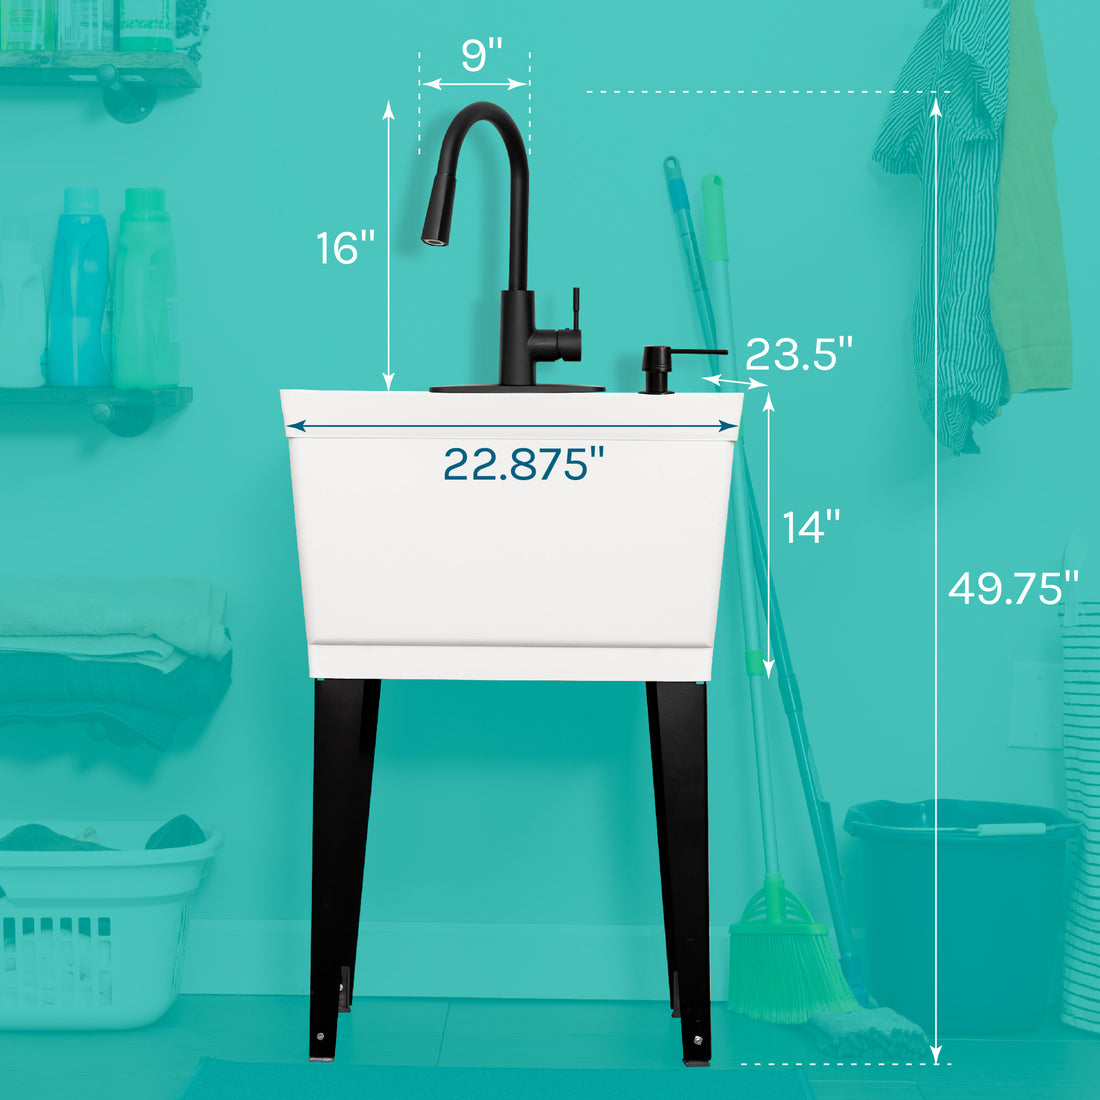 Tehila Standard Freestanding White Utility Sink with Black Finish High-Arc Pull-Down Faucet and Soap Dispenser - Utility sinks vanites Tehila